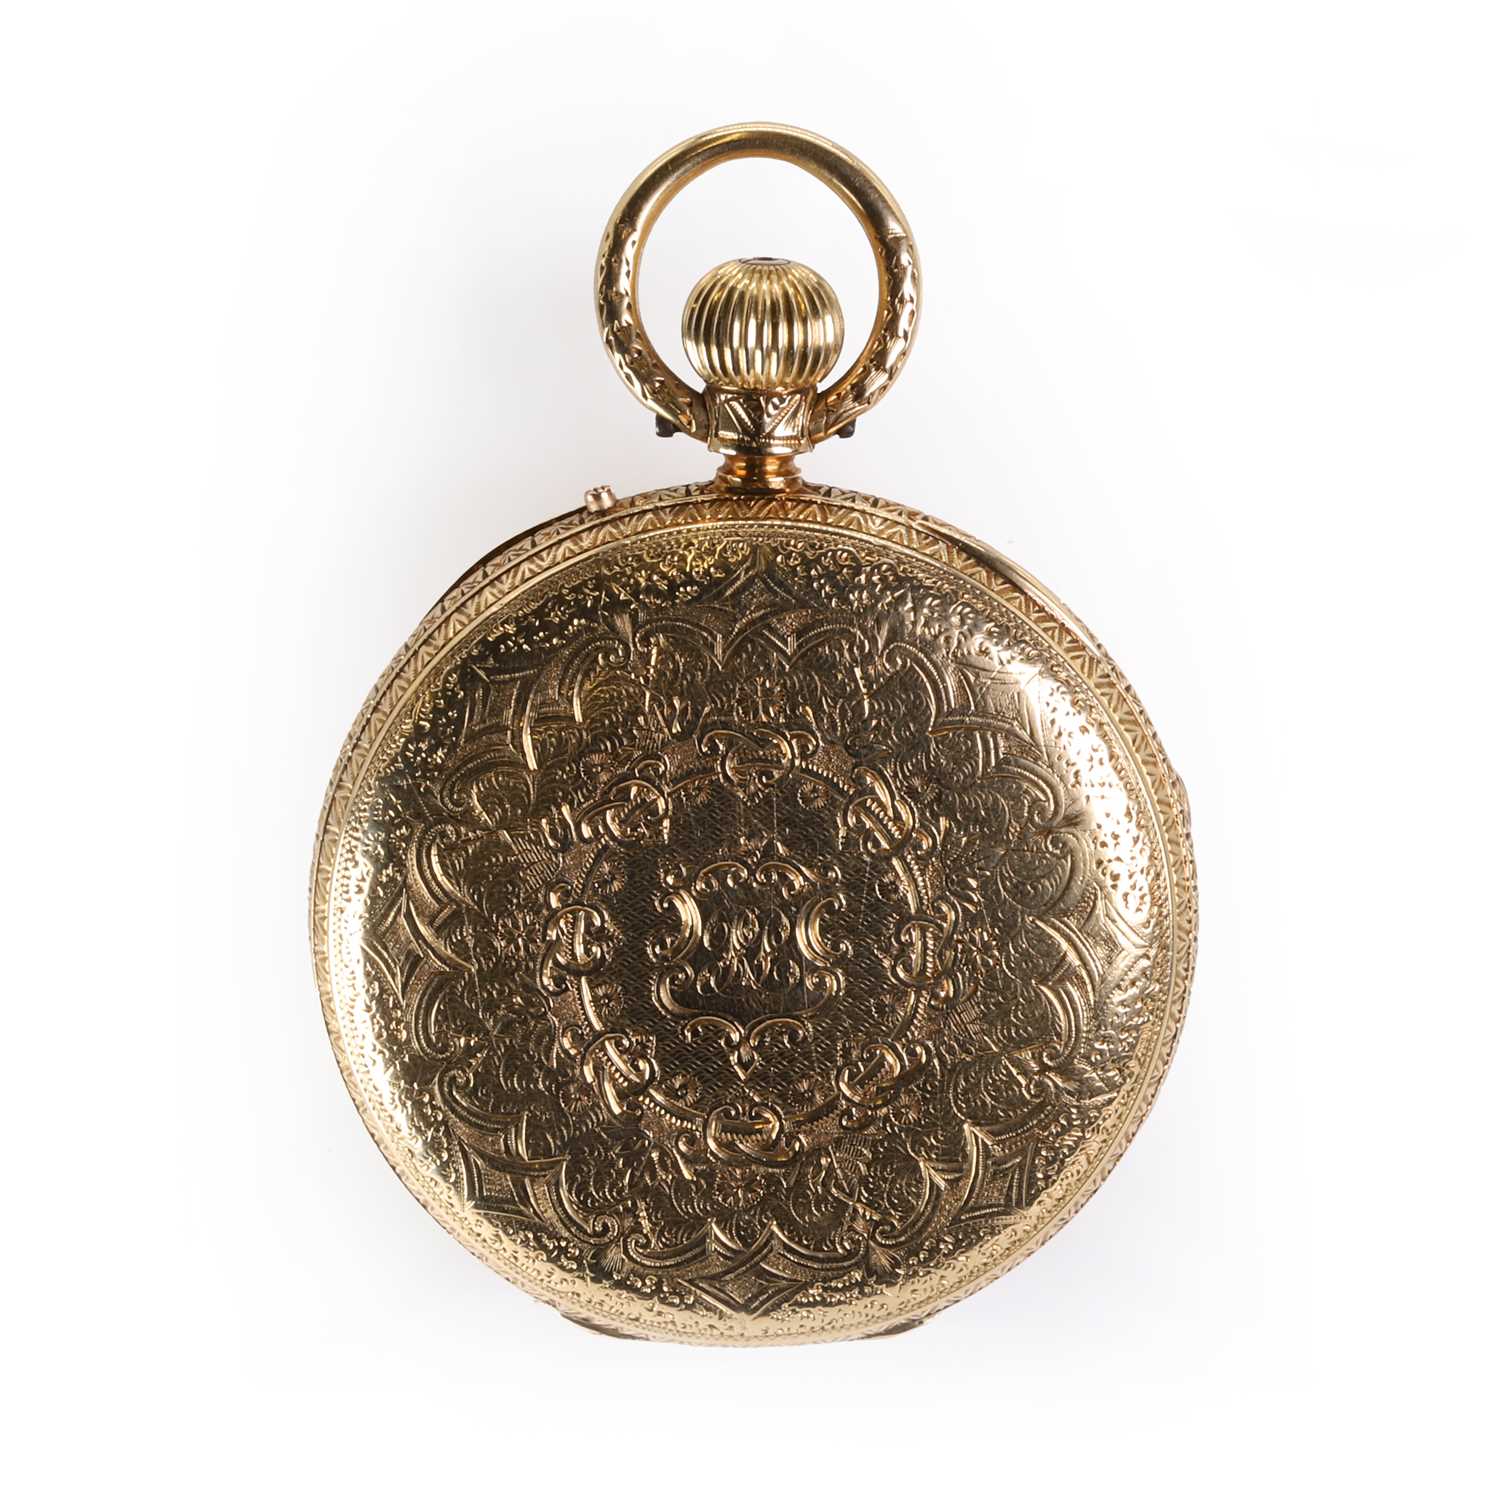 An 18ct gold top wind open faced pocket watch, by John Bennett, - Image 2 of 3